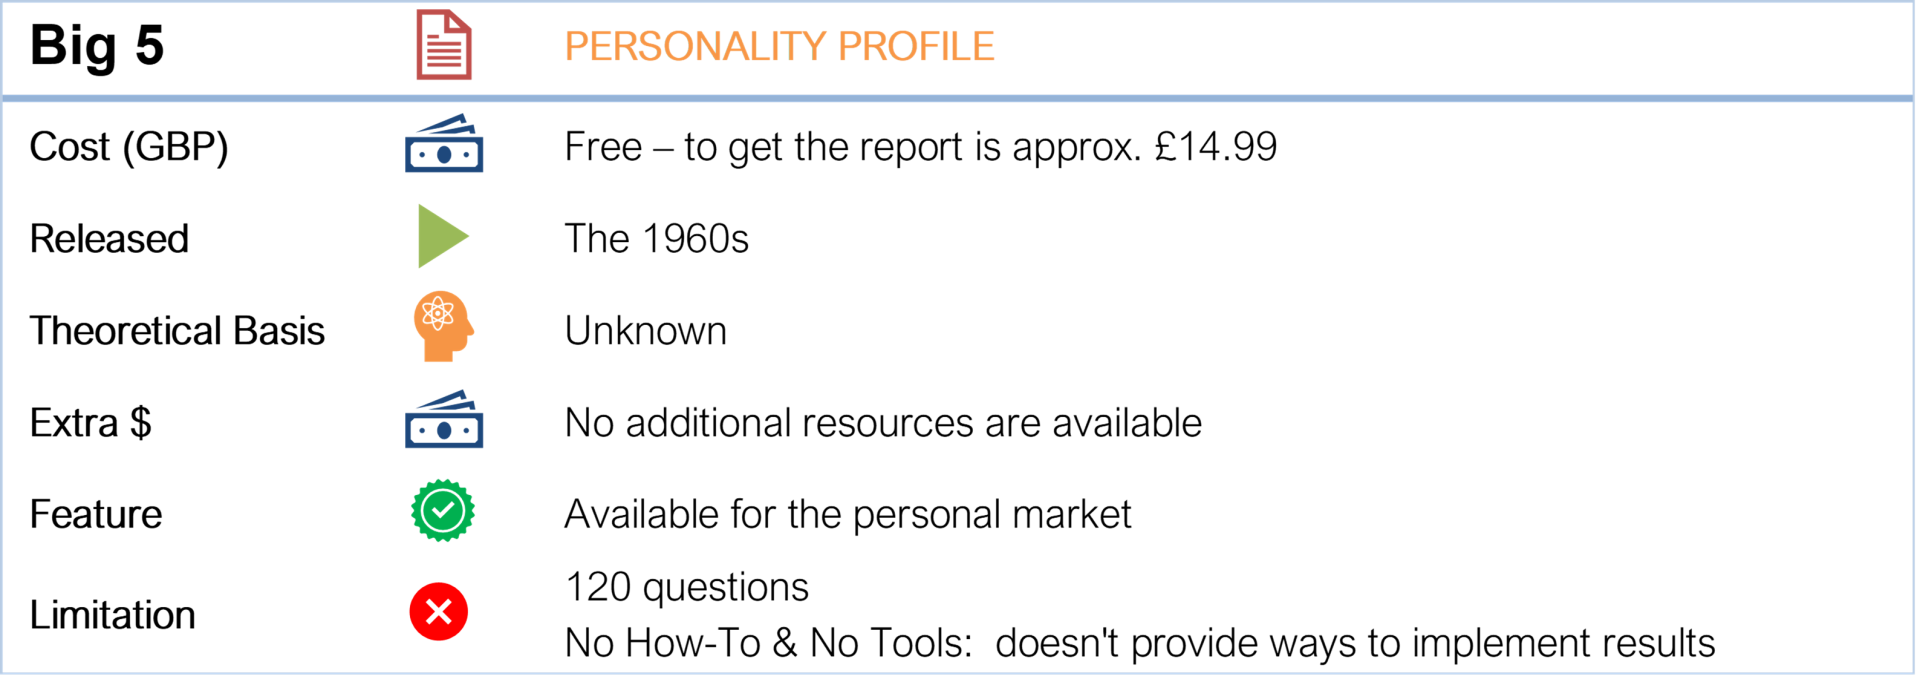 Big 5 personality traits